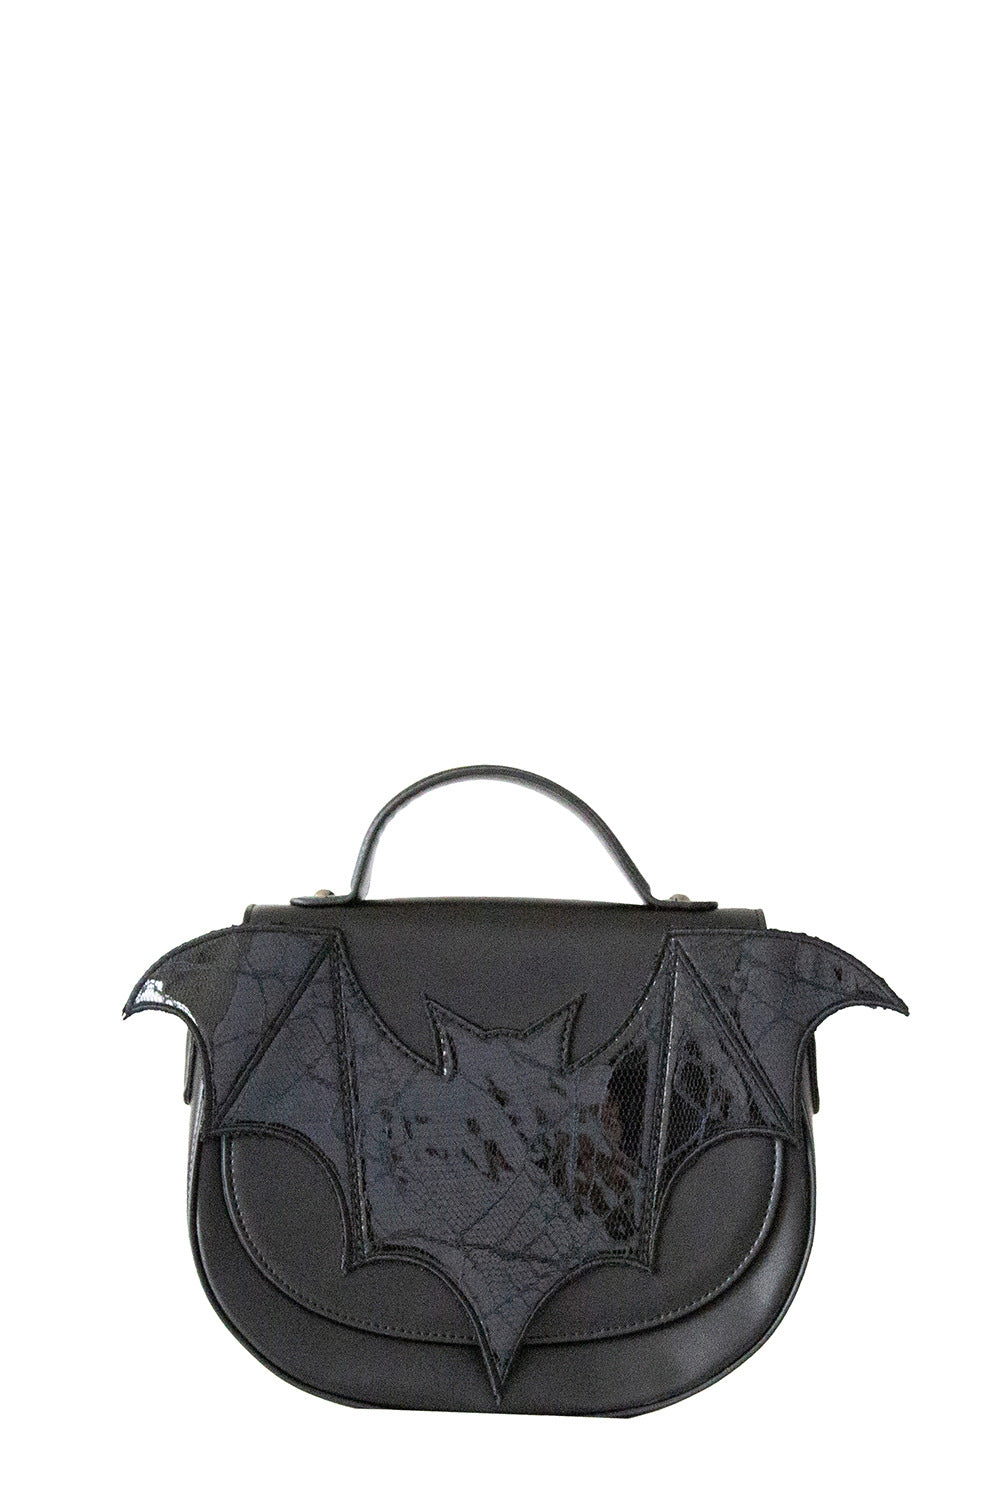 Bat print side body handbag 